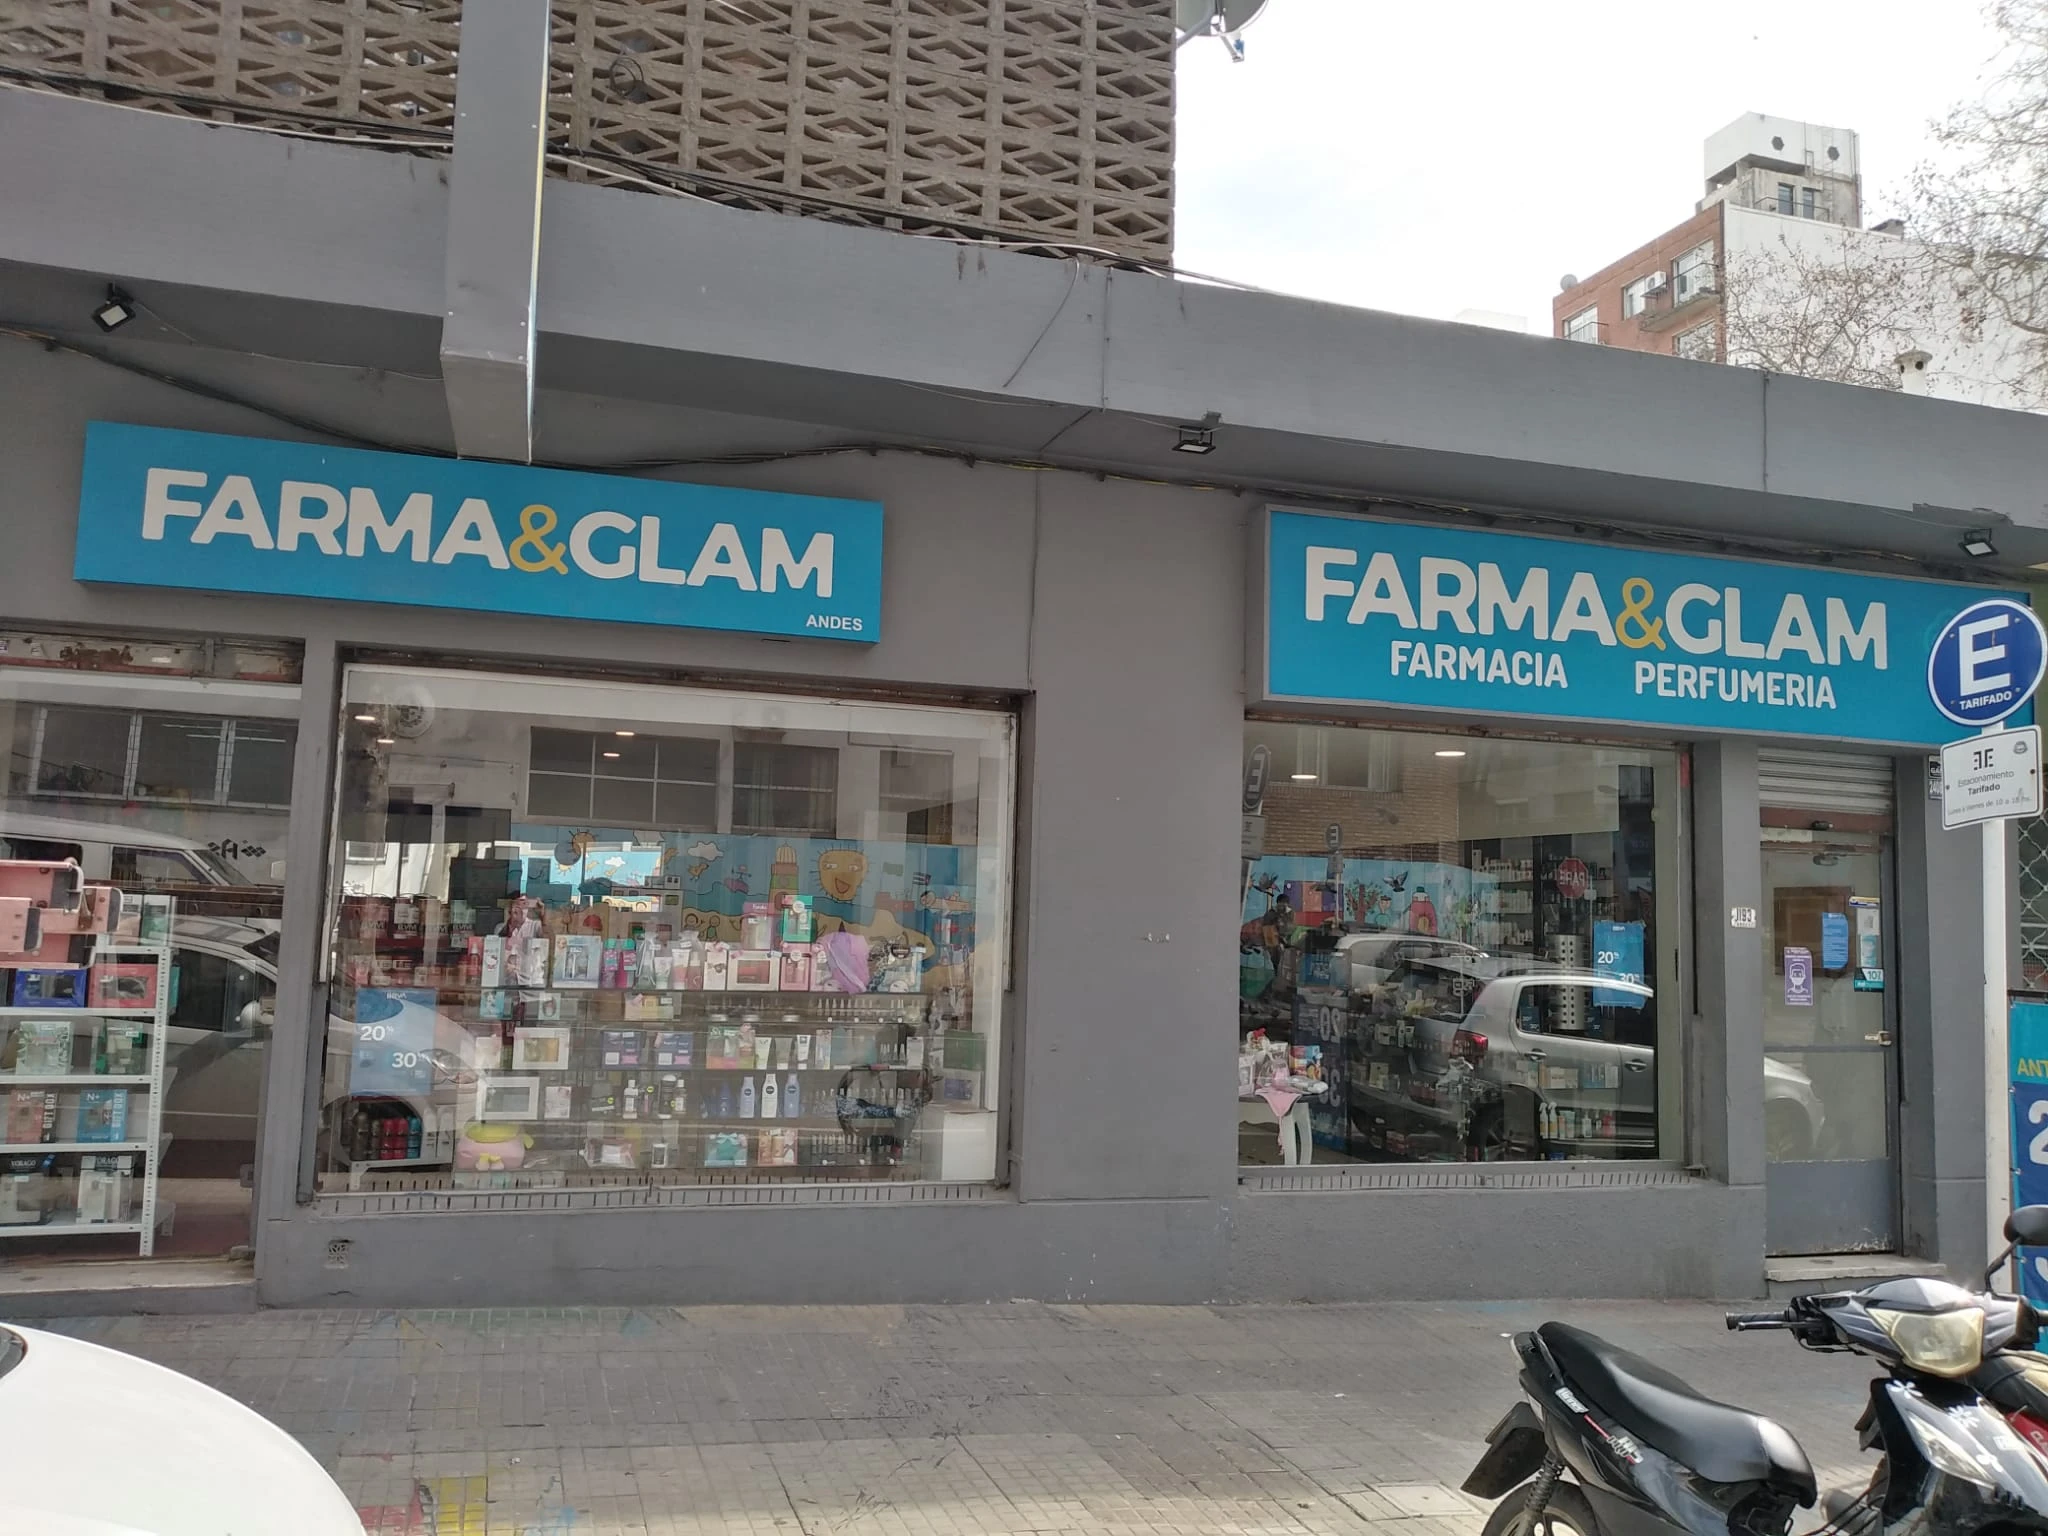 Farma&Glam (Andes)